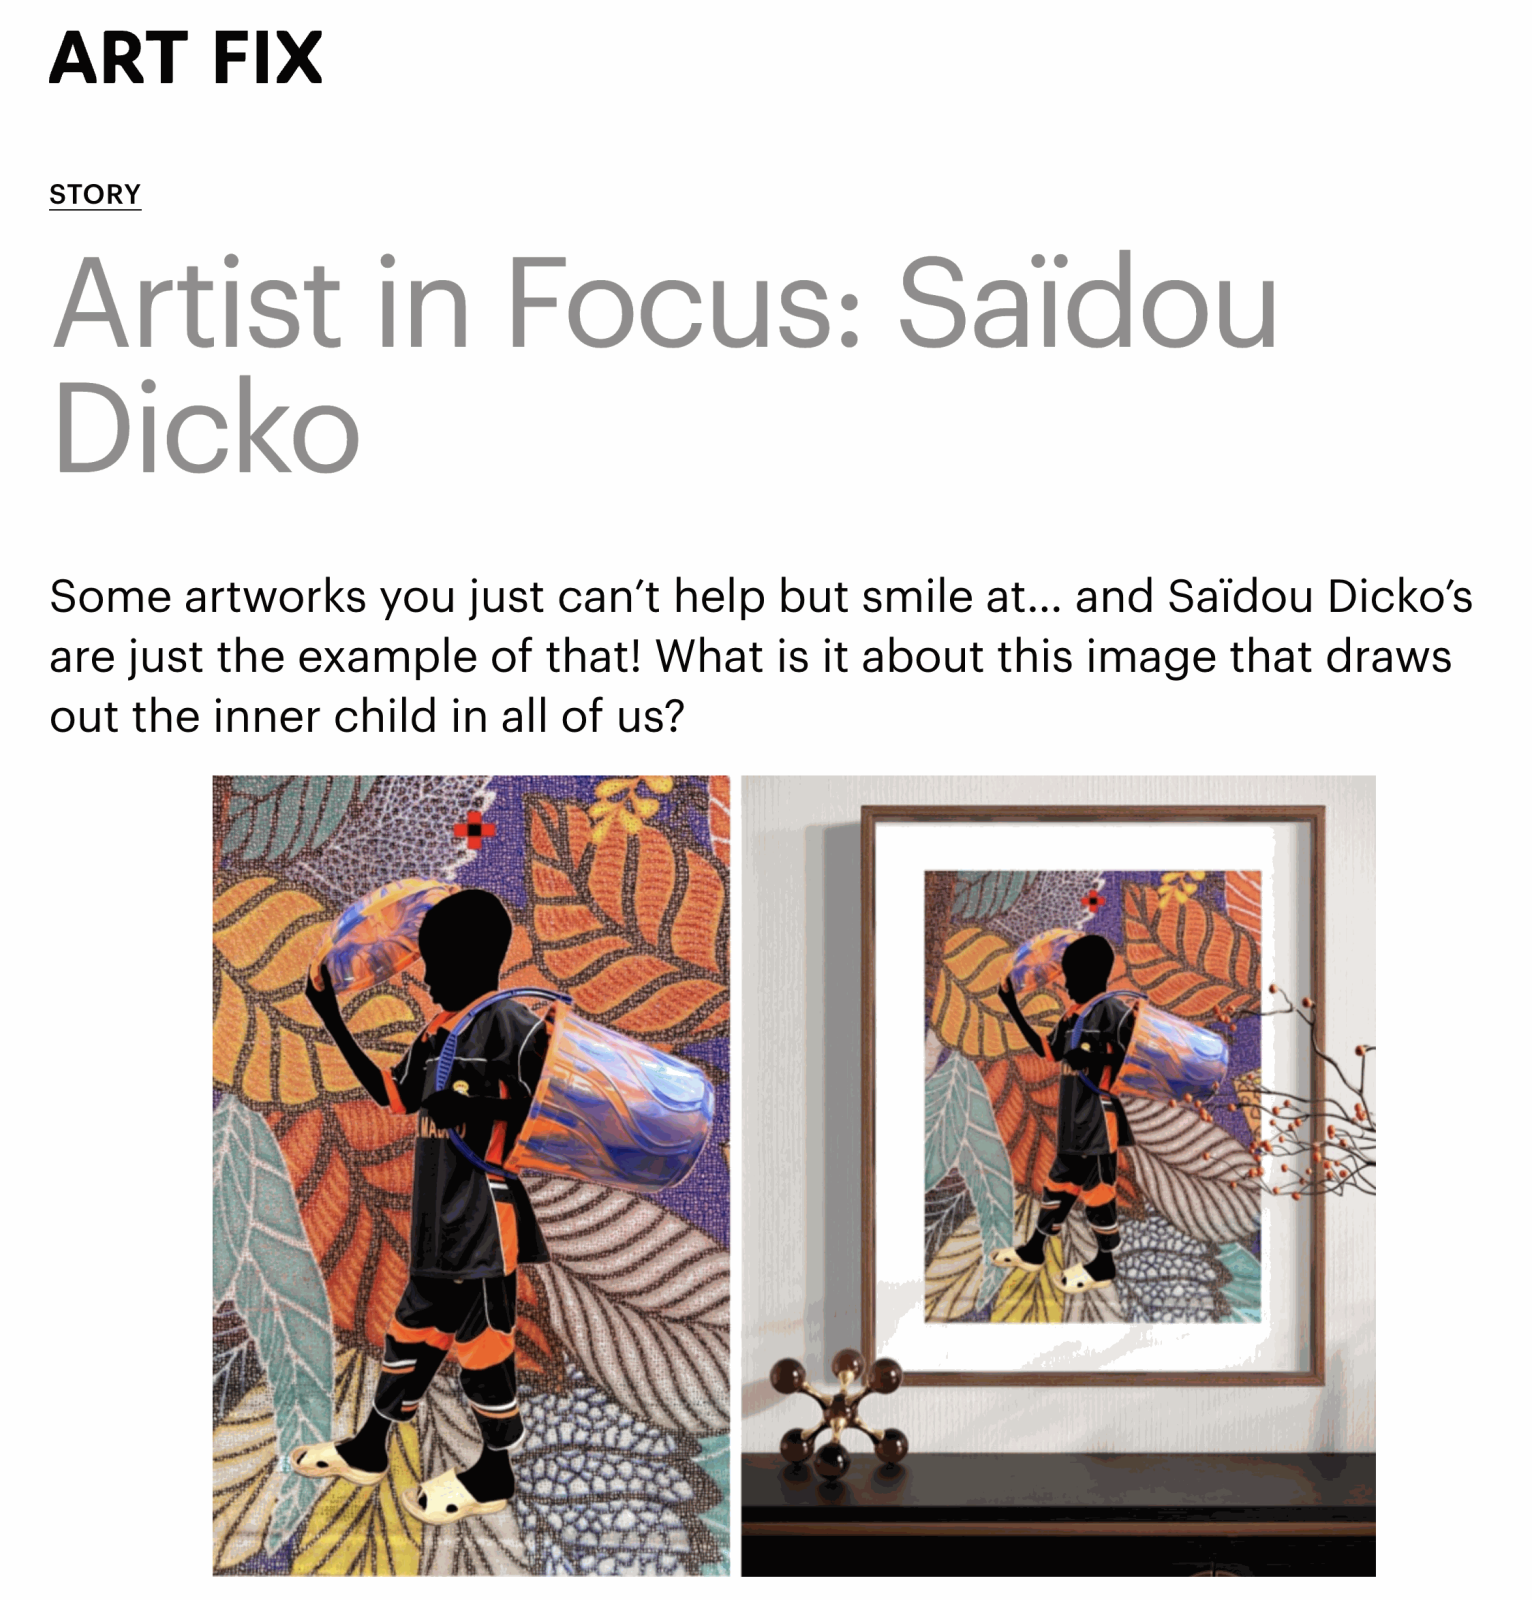 Artist in Focus: Saïdou Dicko